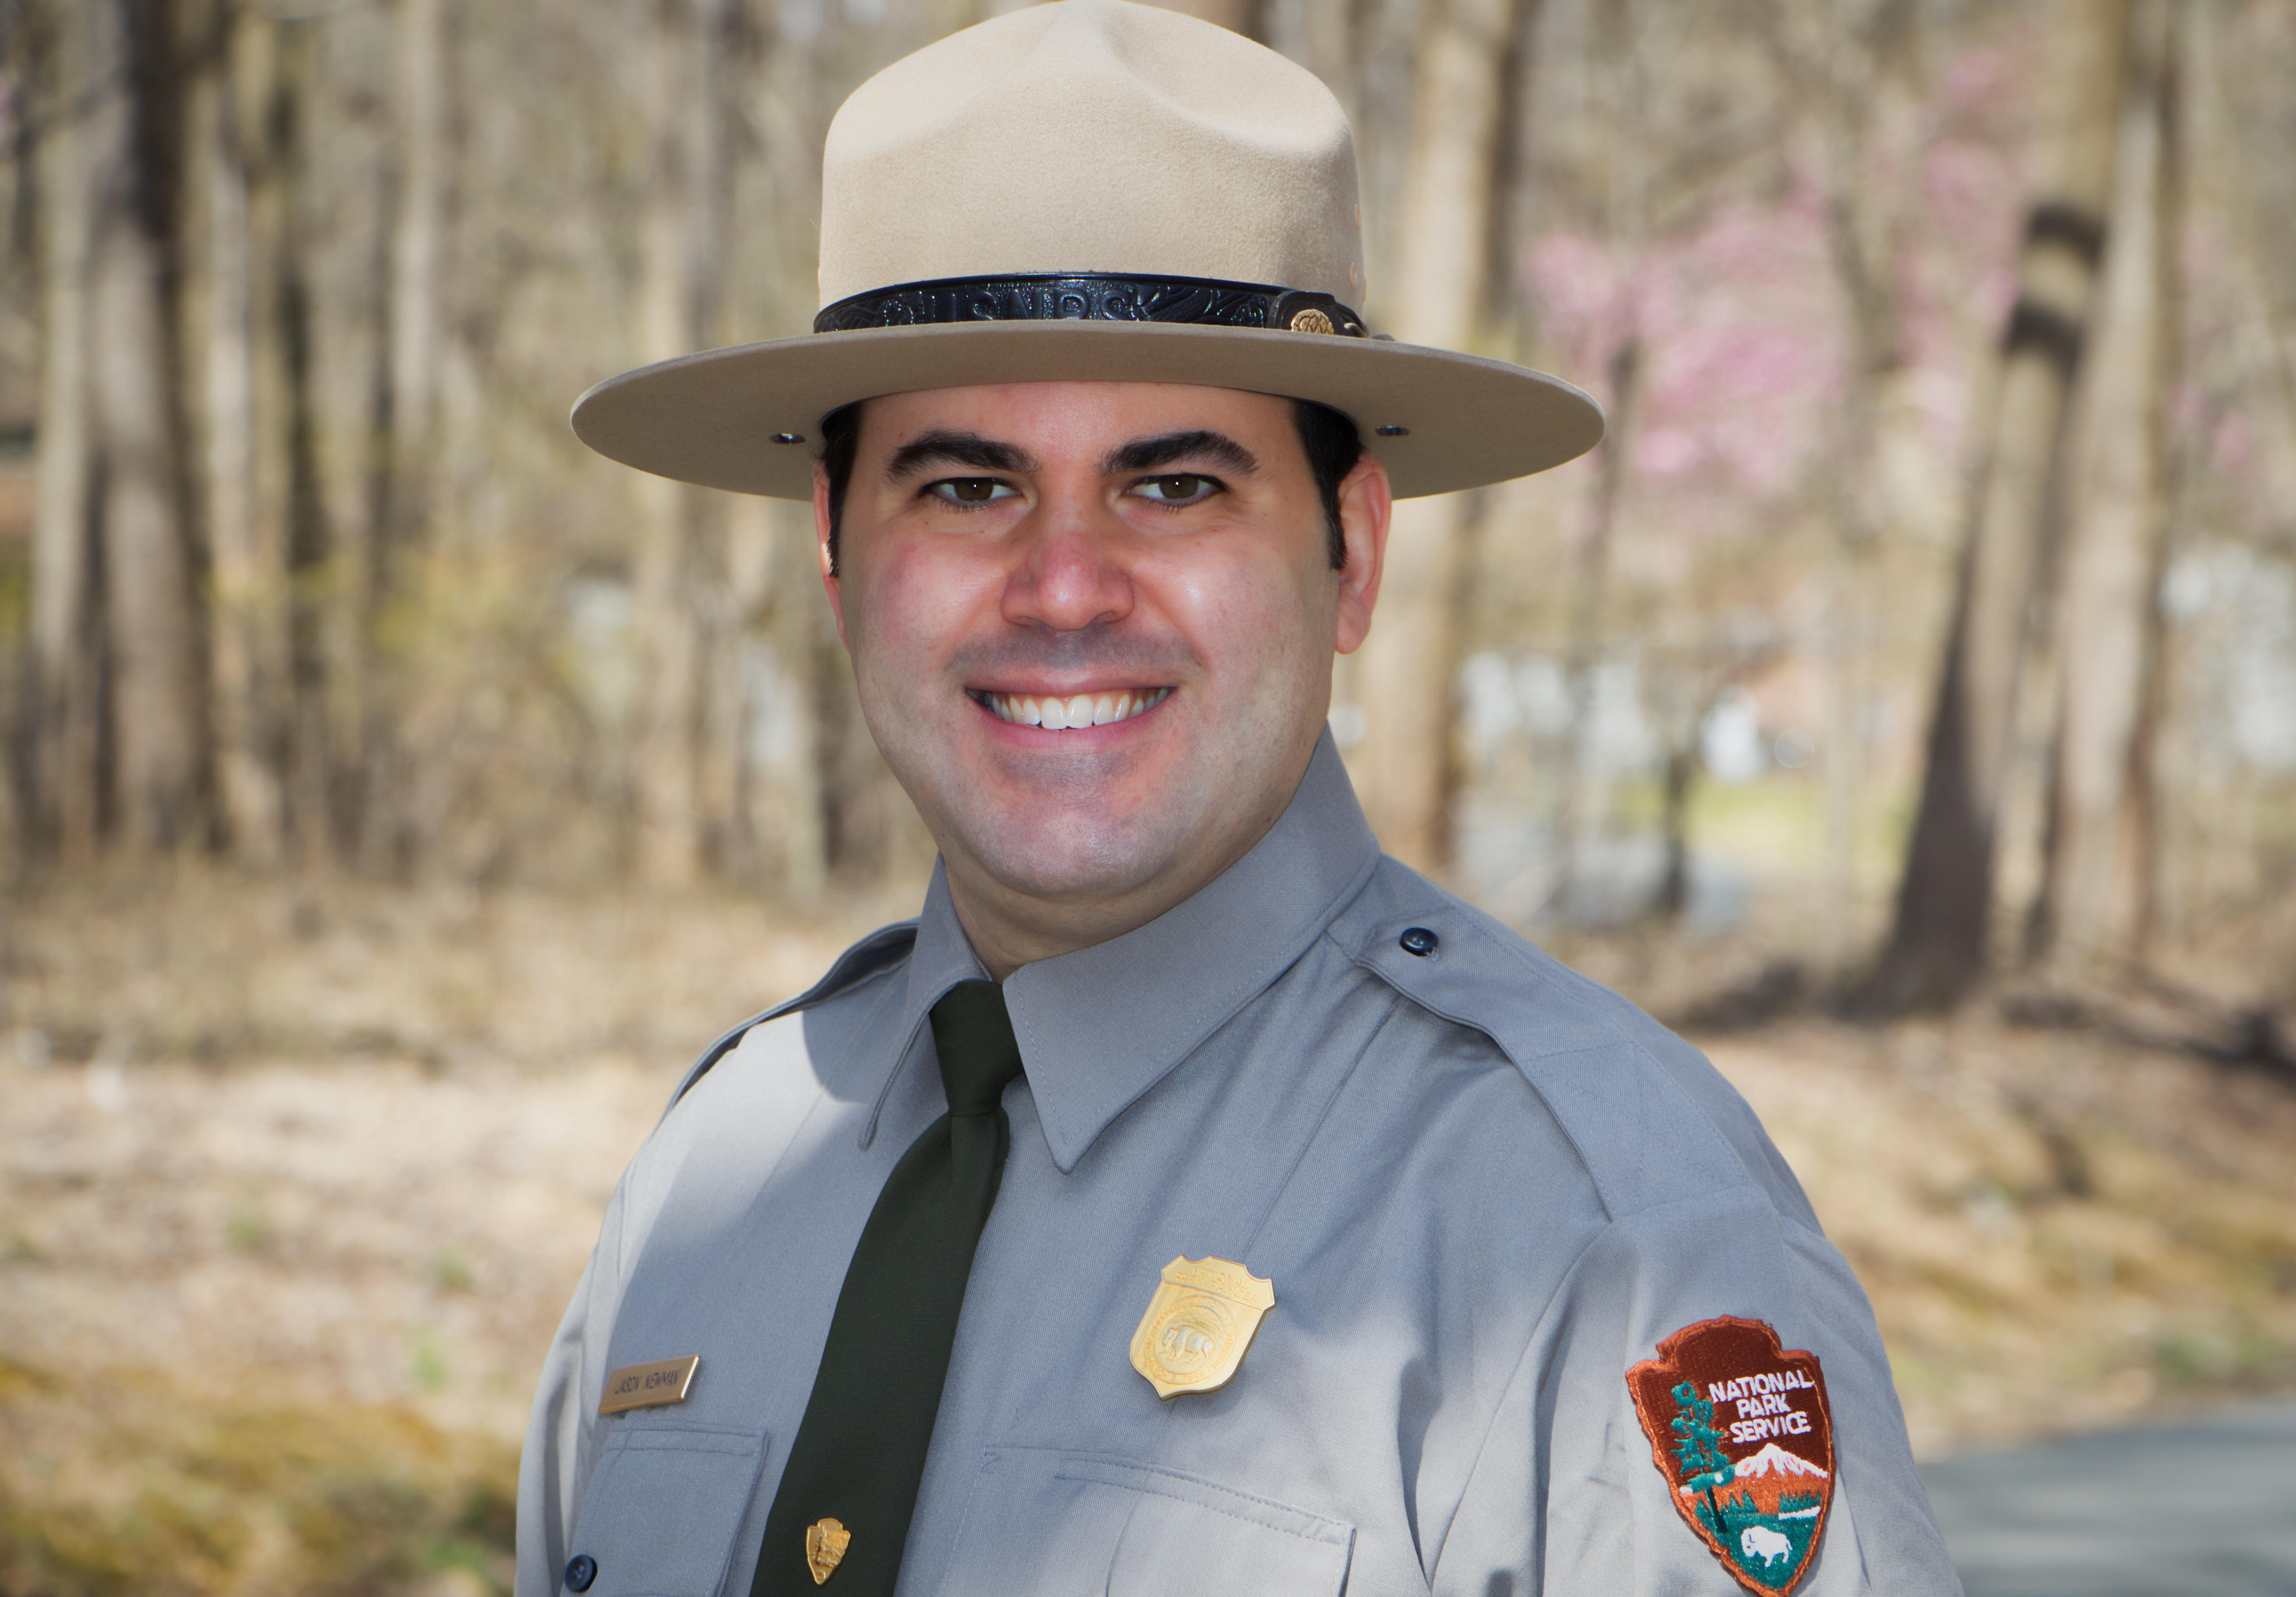 park ranger in uniform